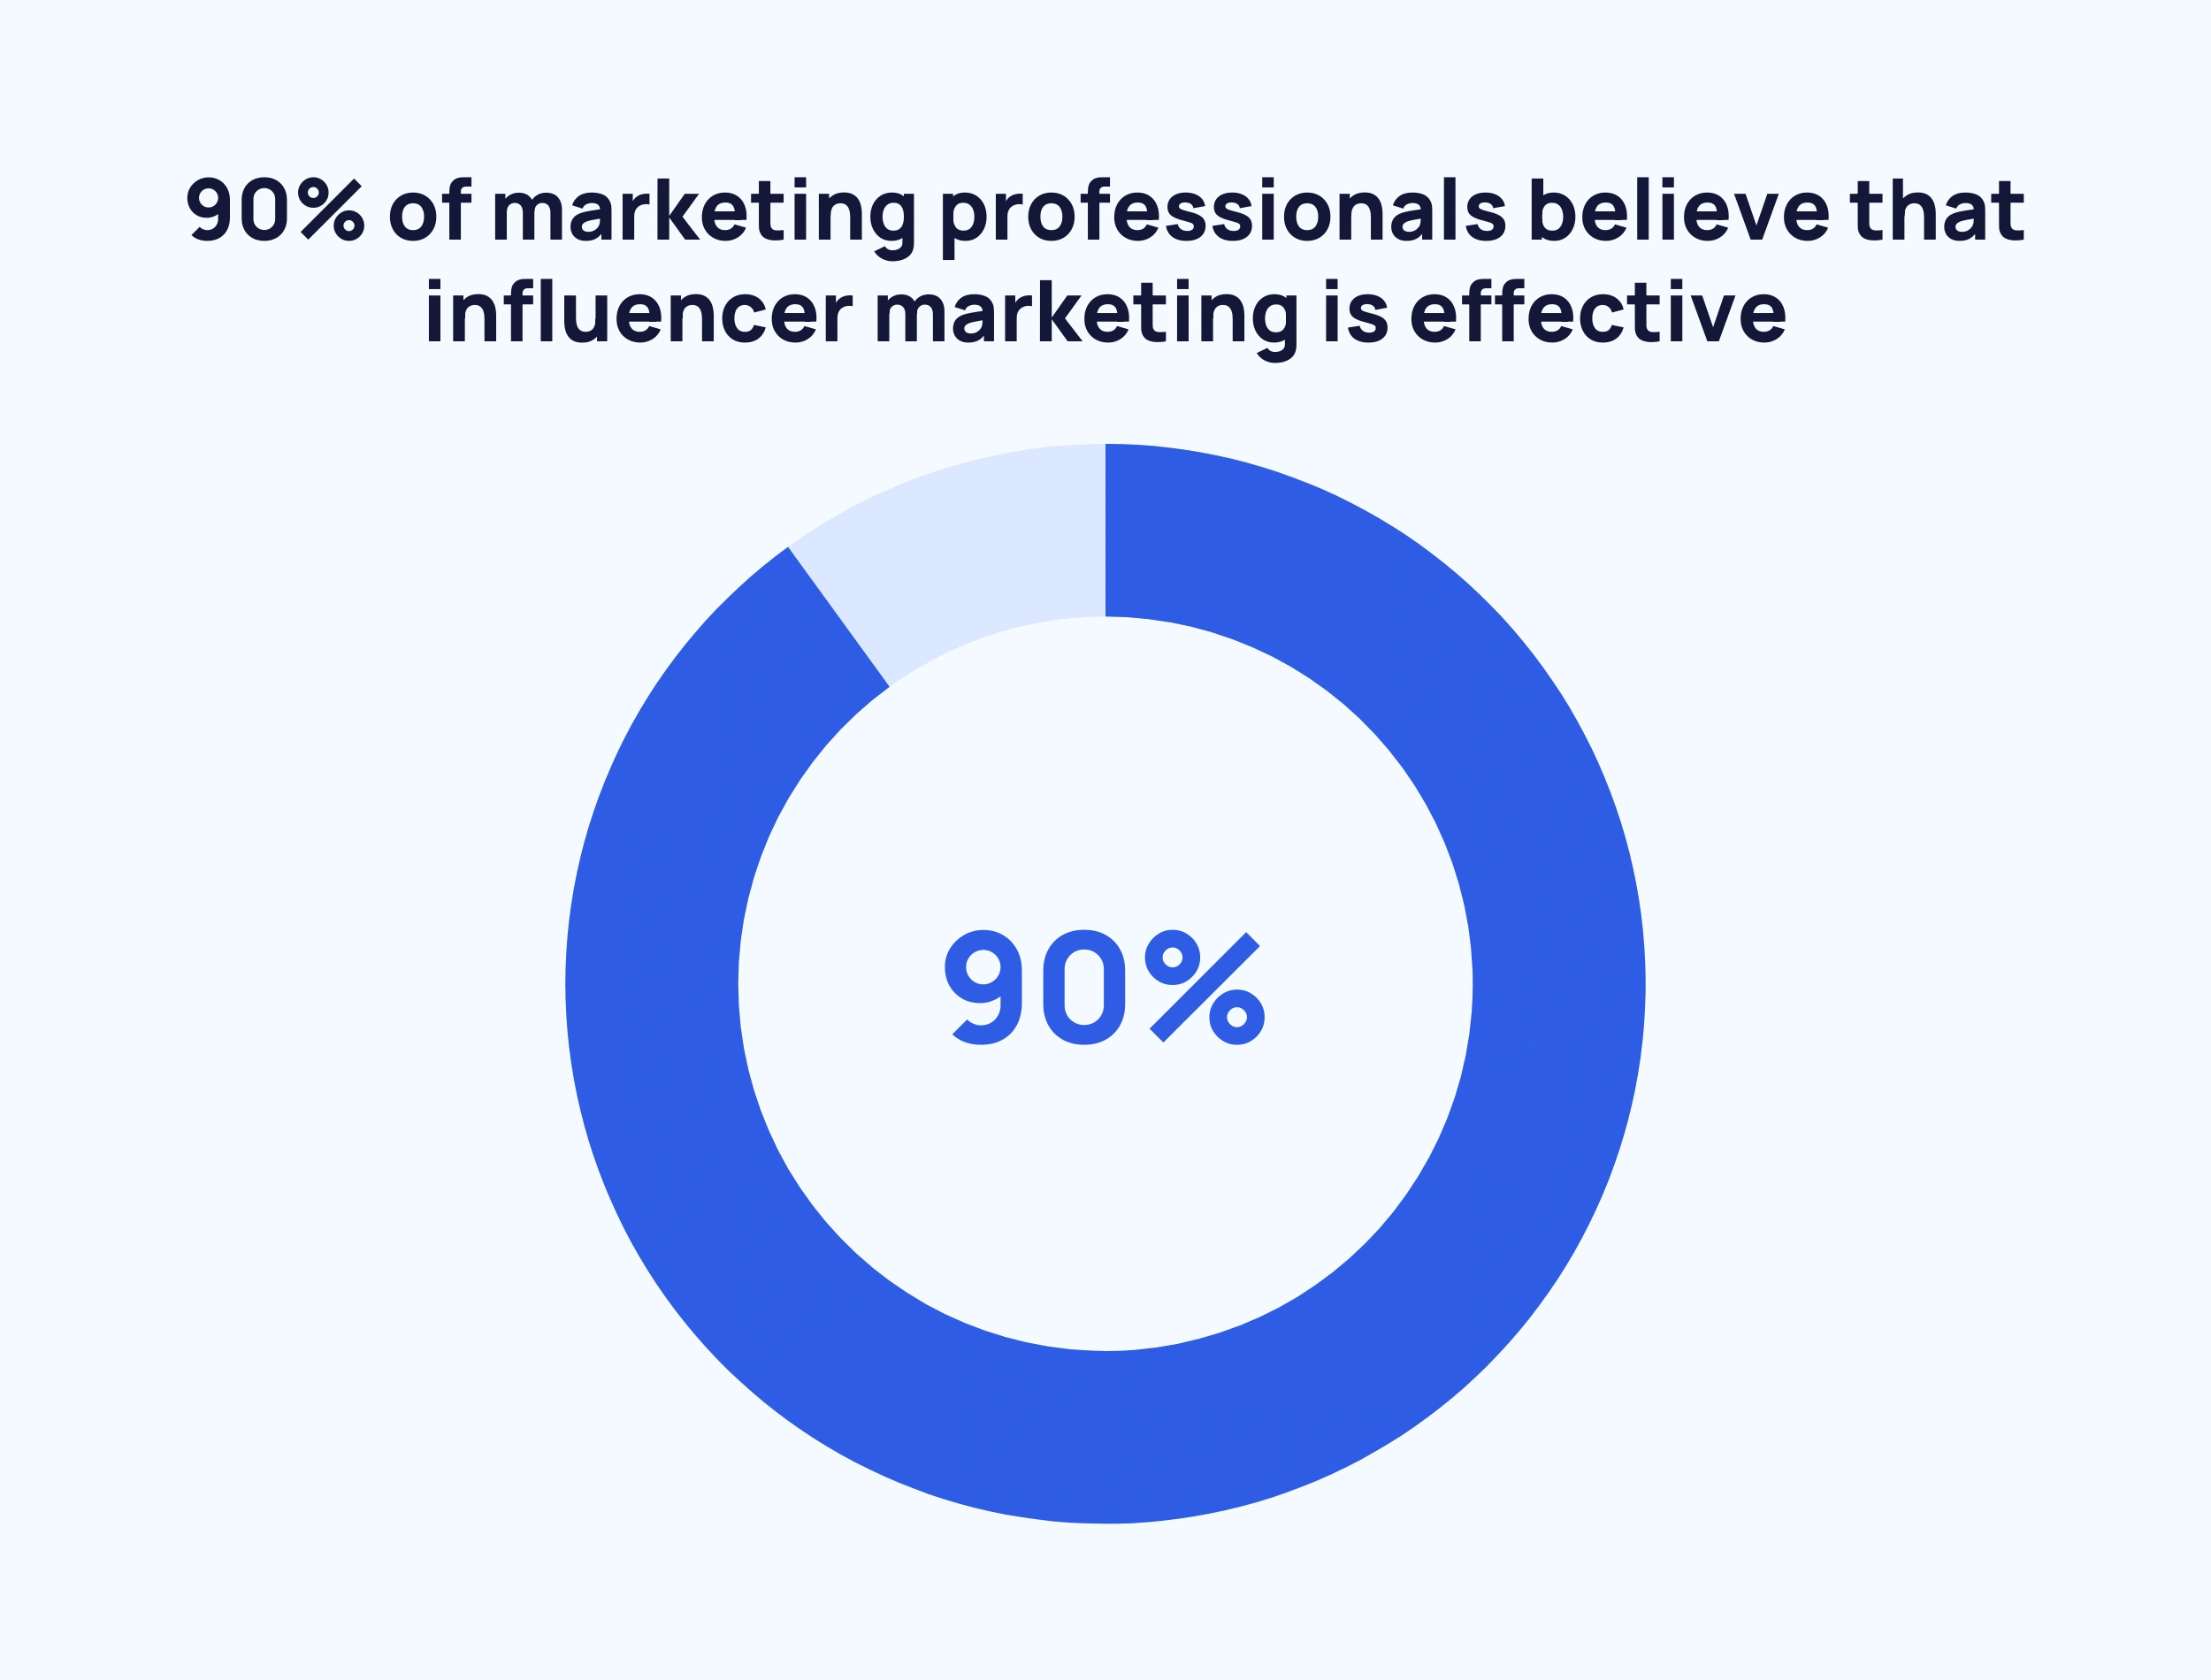 influencer-marketing-effective-min.png